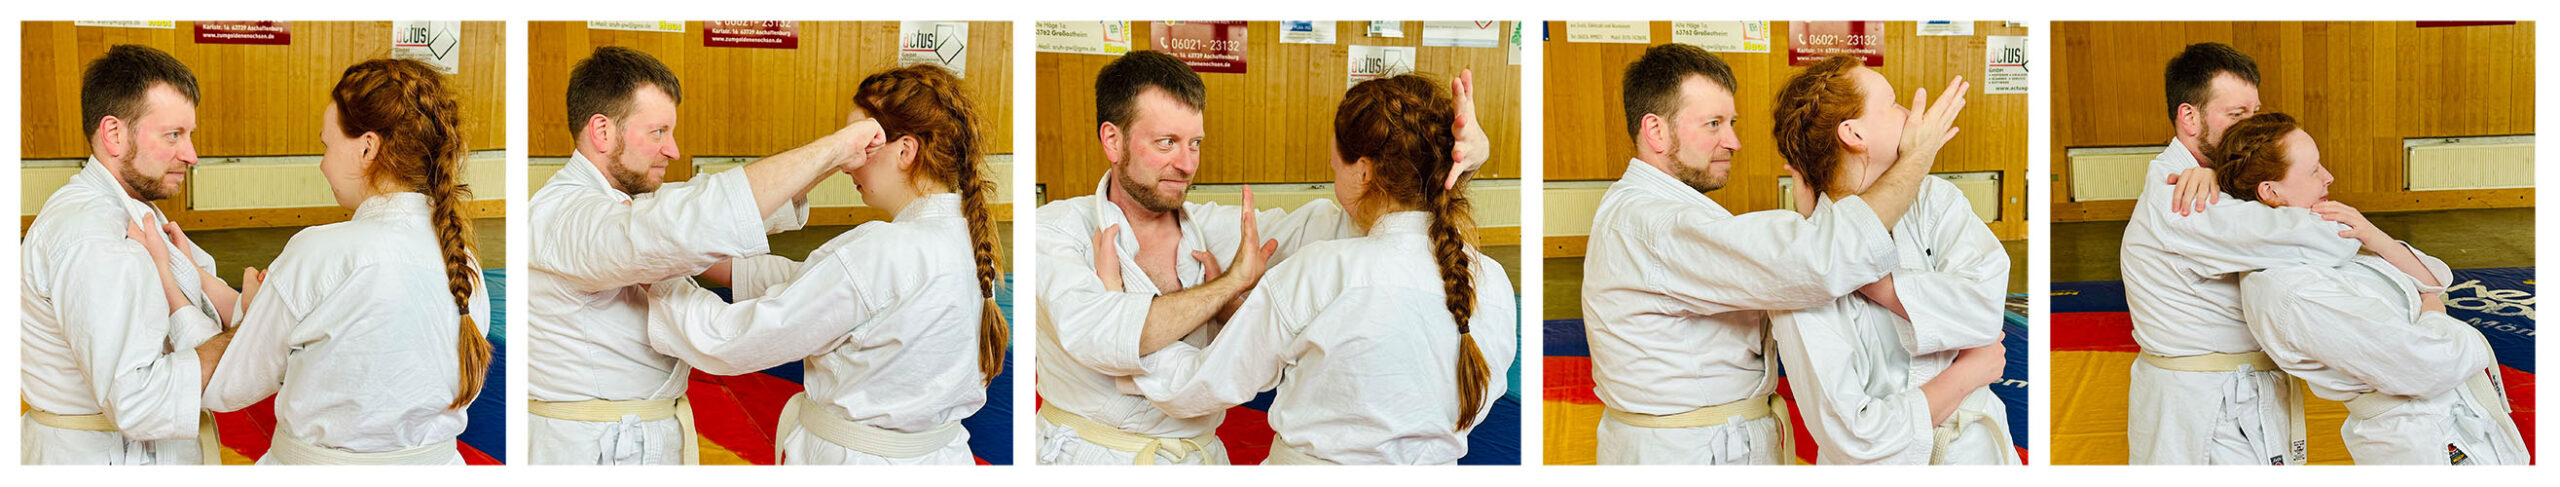 karate kampfsport kampfkunst martial arts fulda selbstverteidigung sport fitness